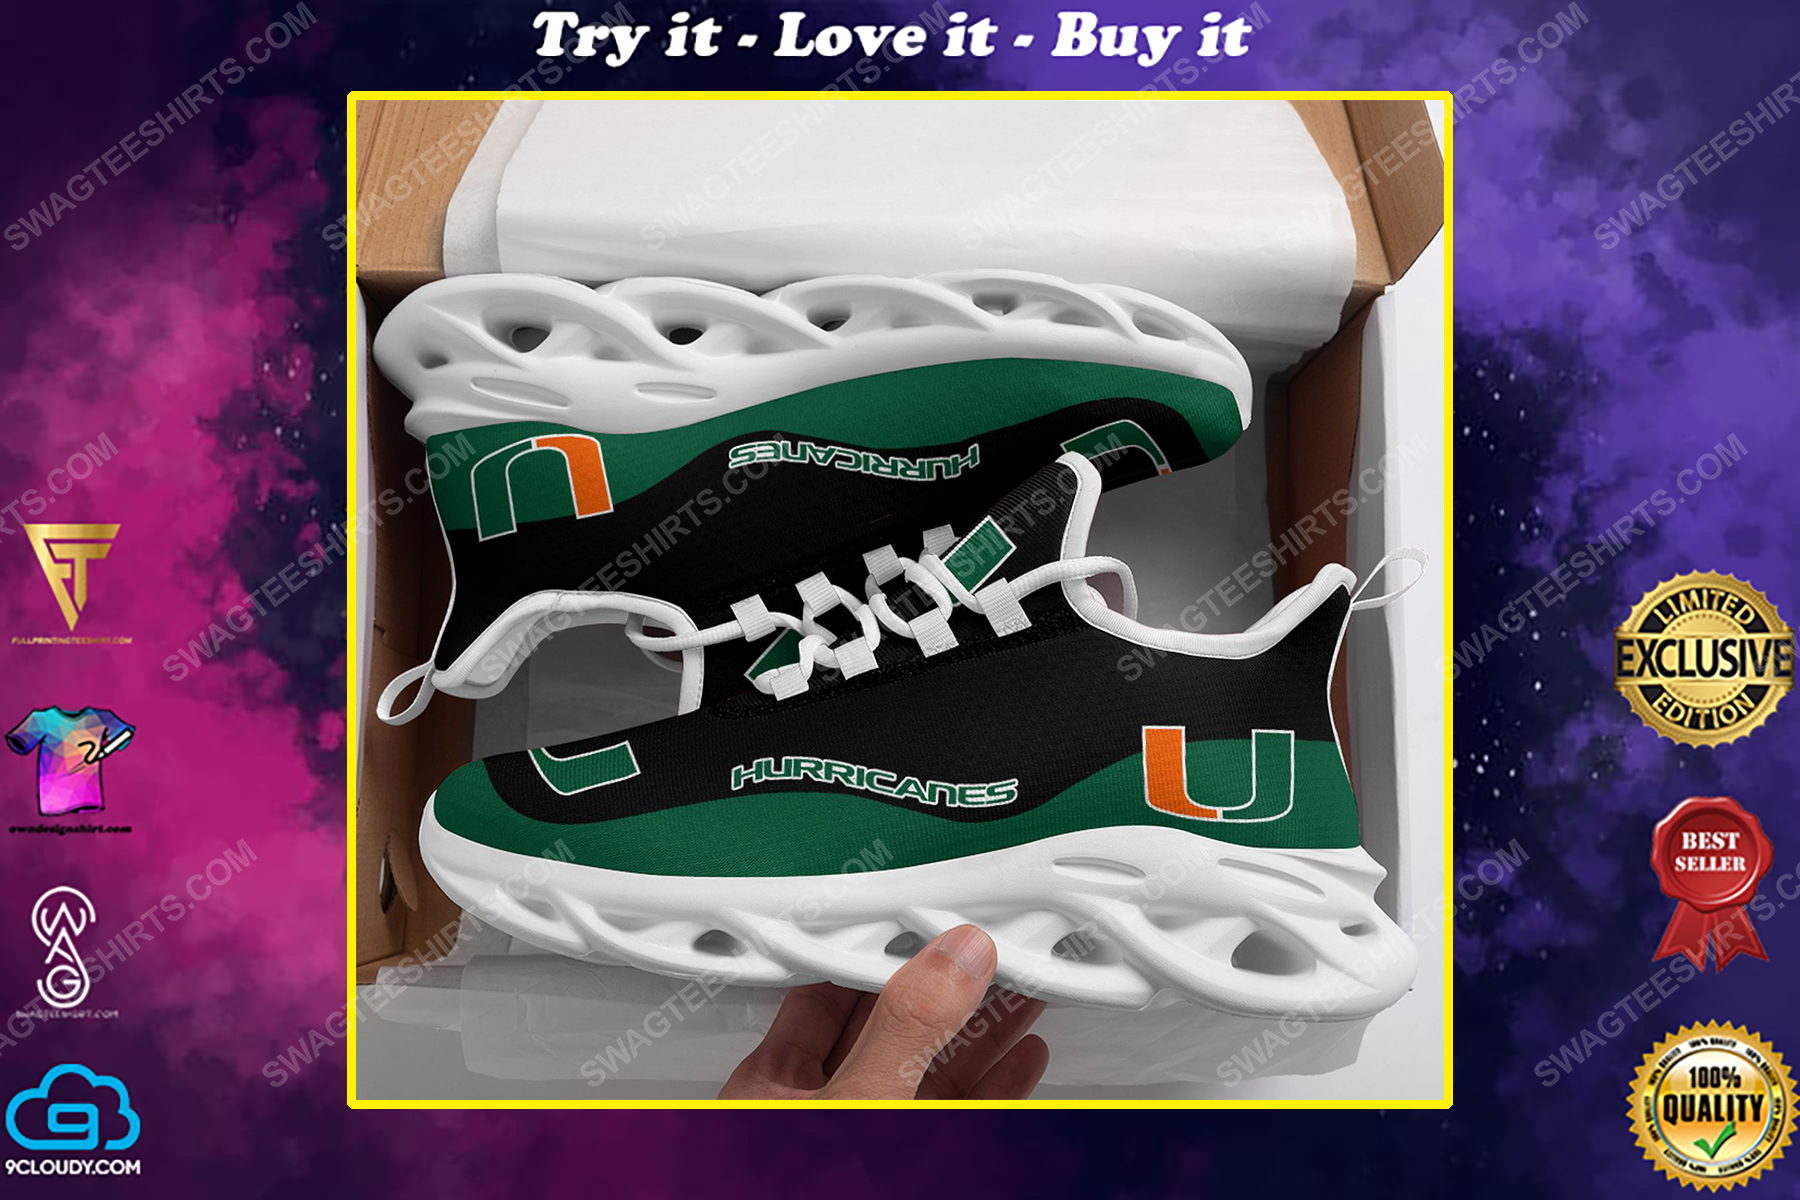 The miami hurricanes football team max soul shoes